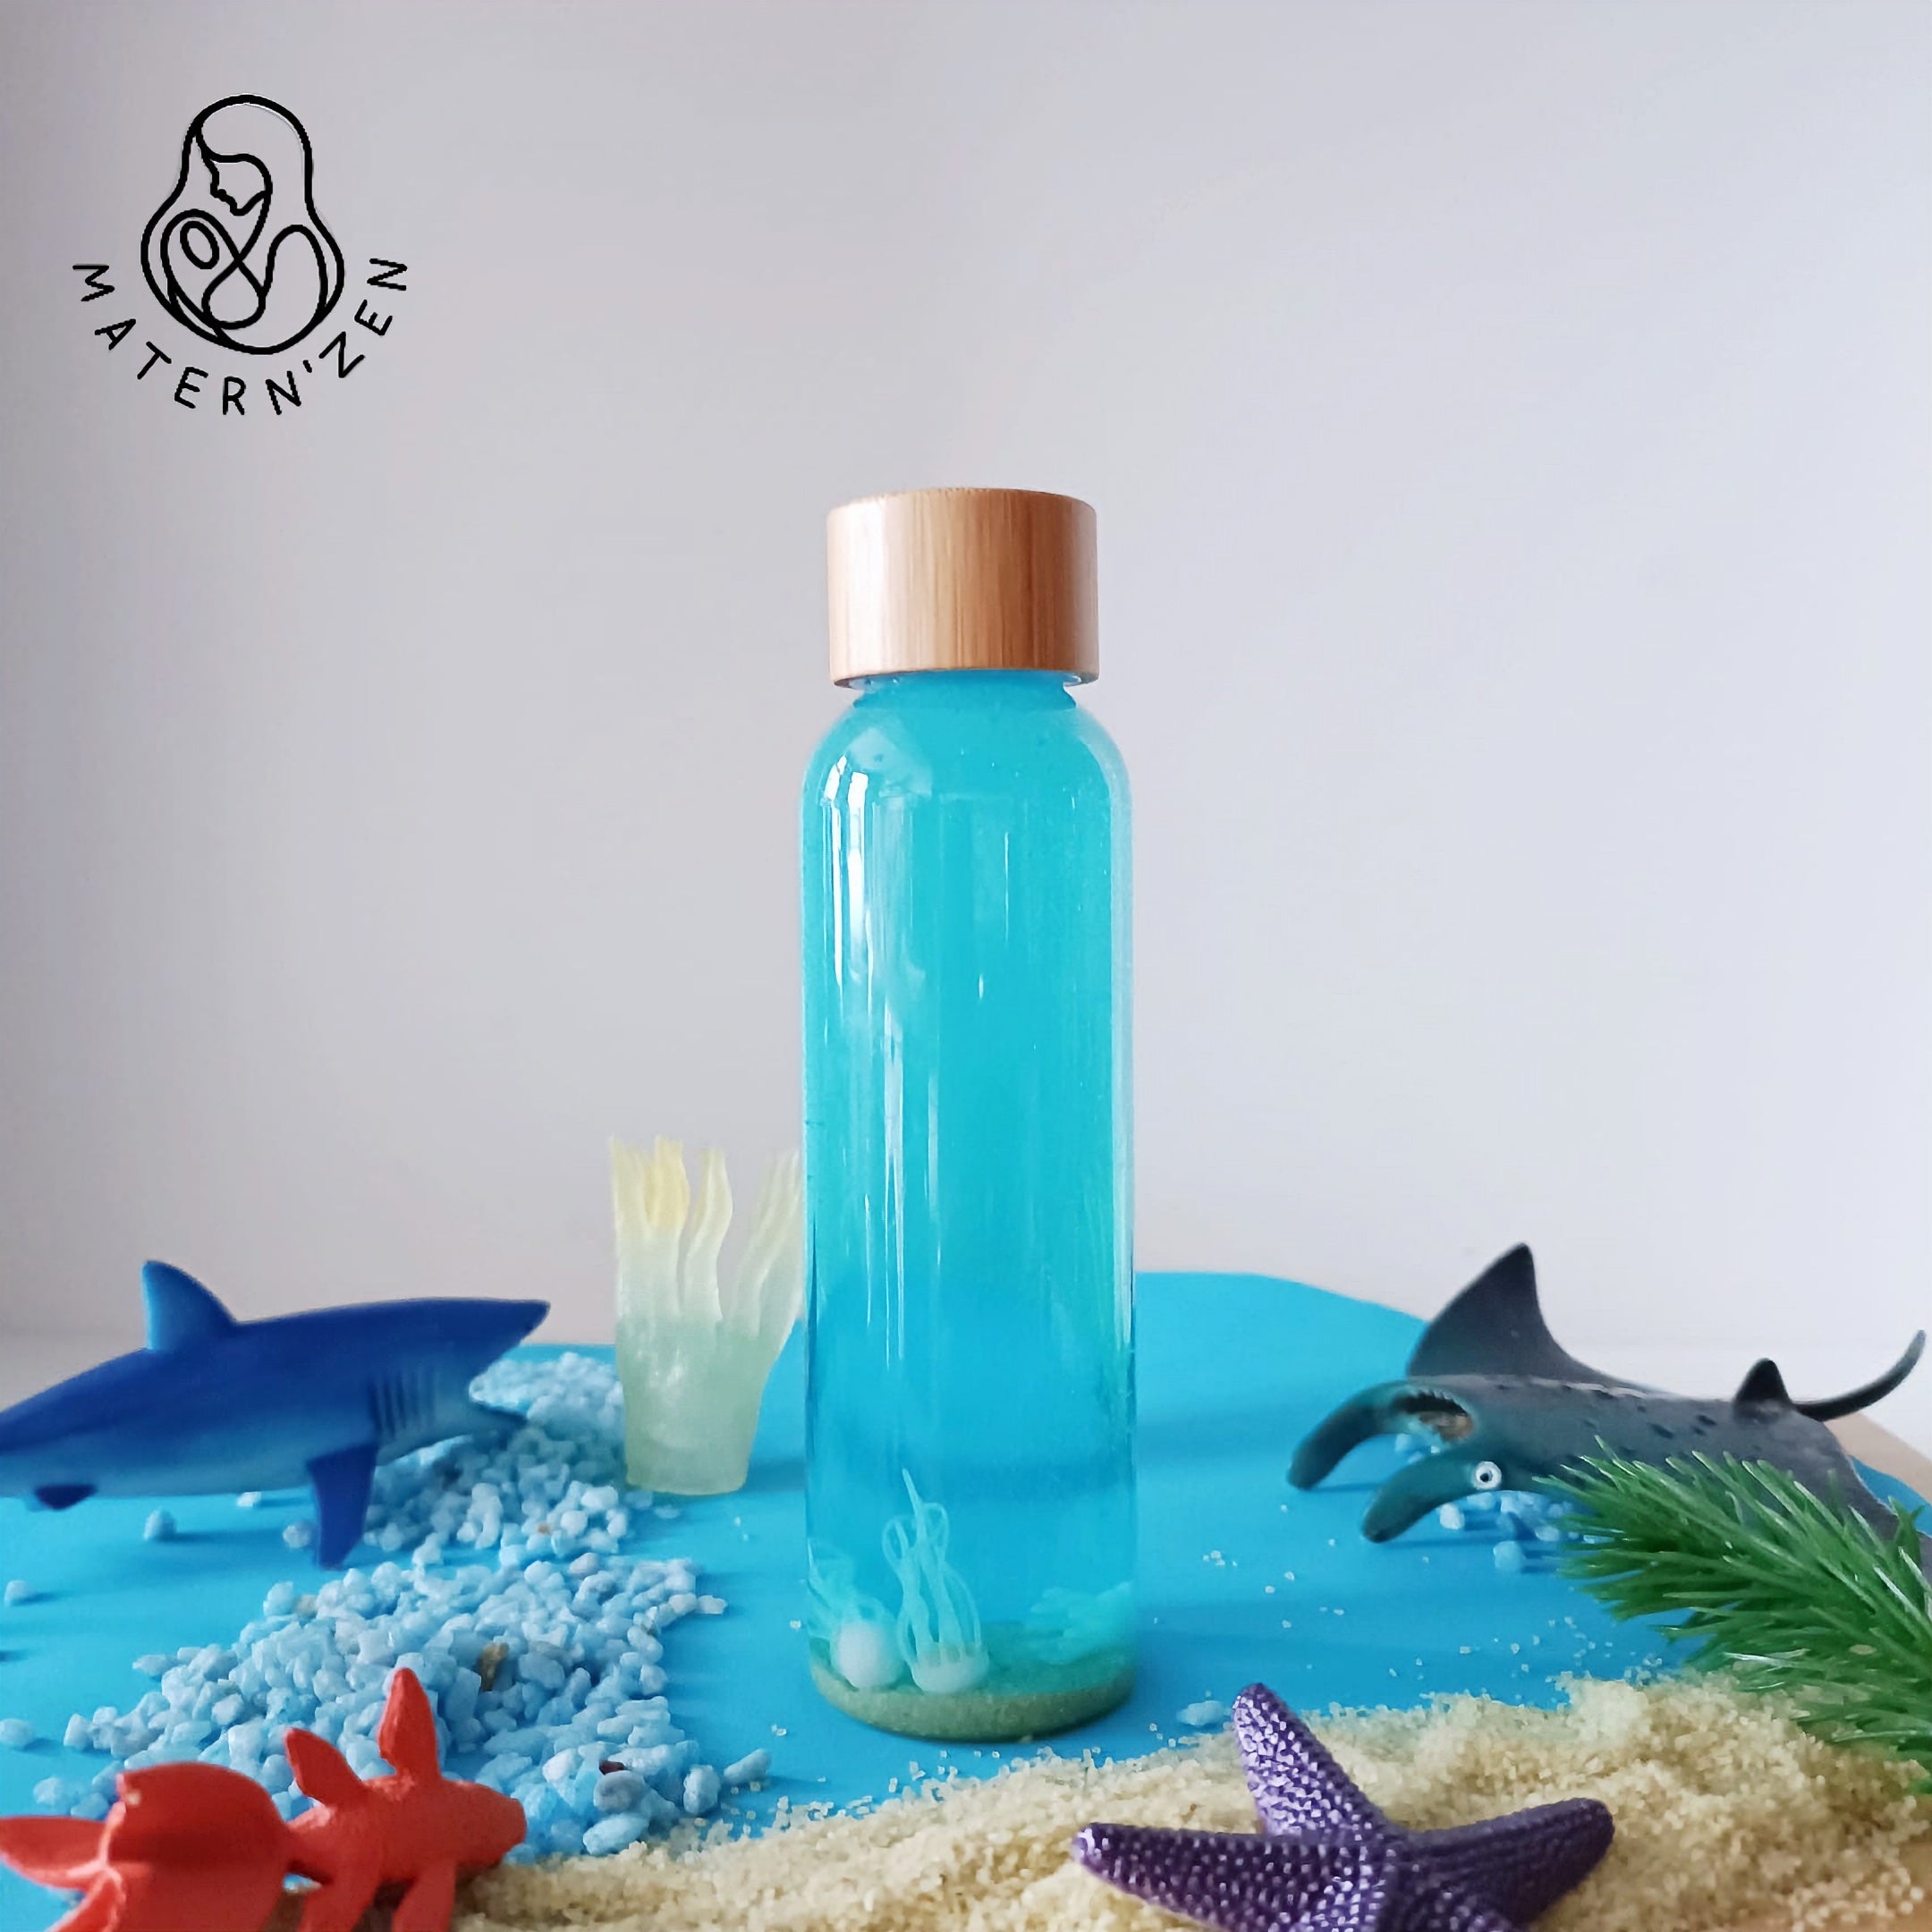 Botella Sensorial Float Bottle Green - Mumerakis